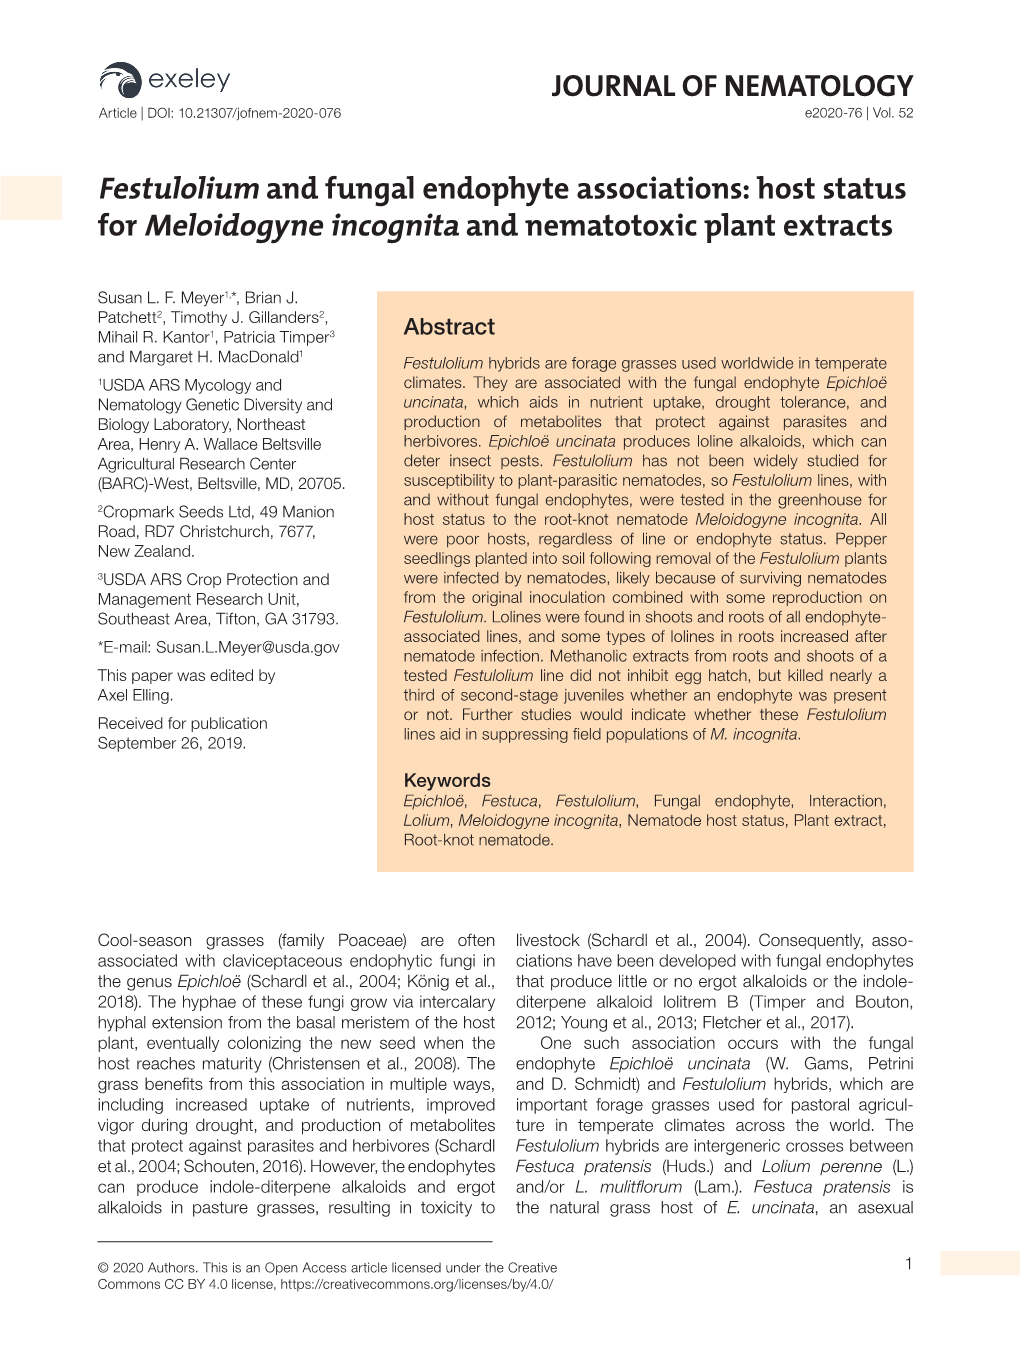 JOURNAL of NEMATOLOGY Festulolium and Fungal